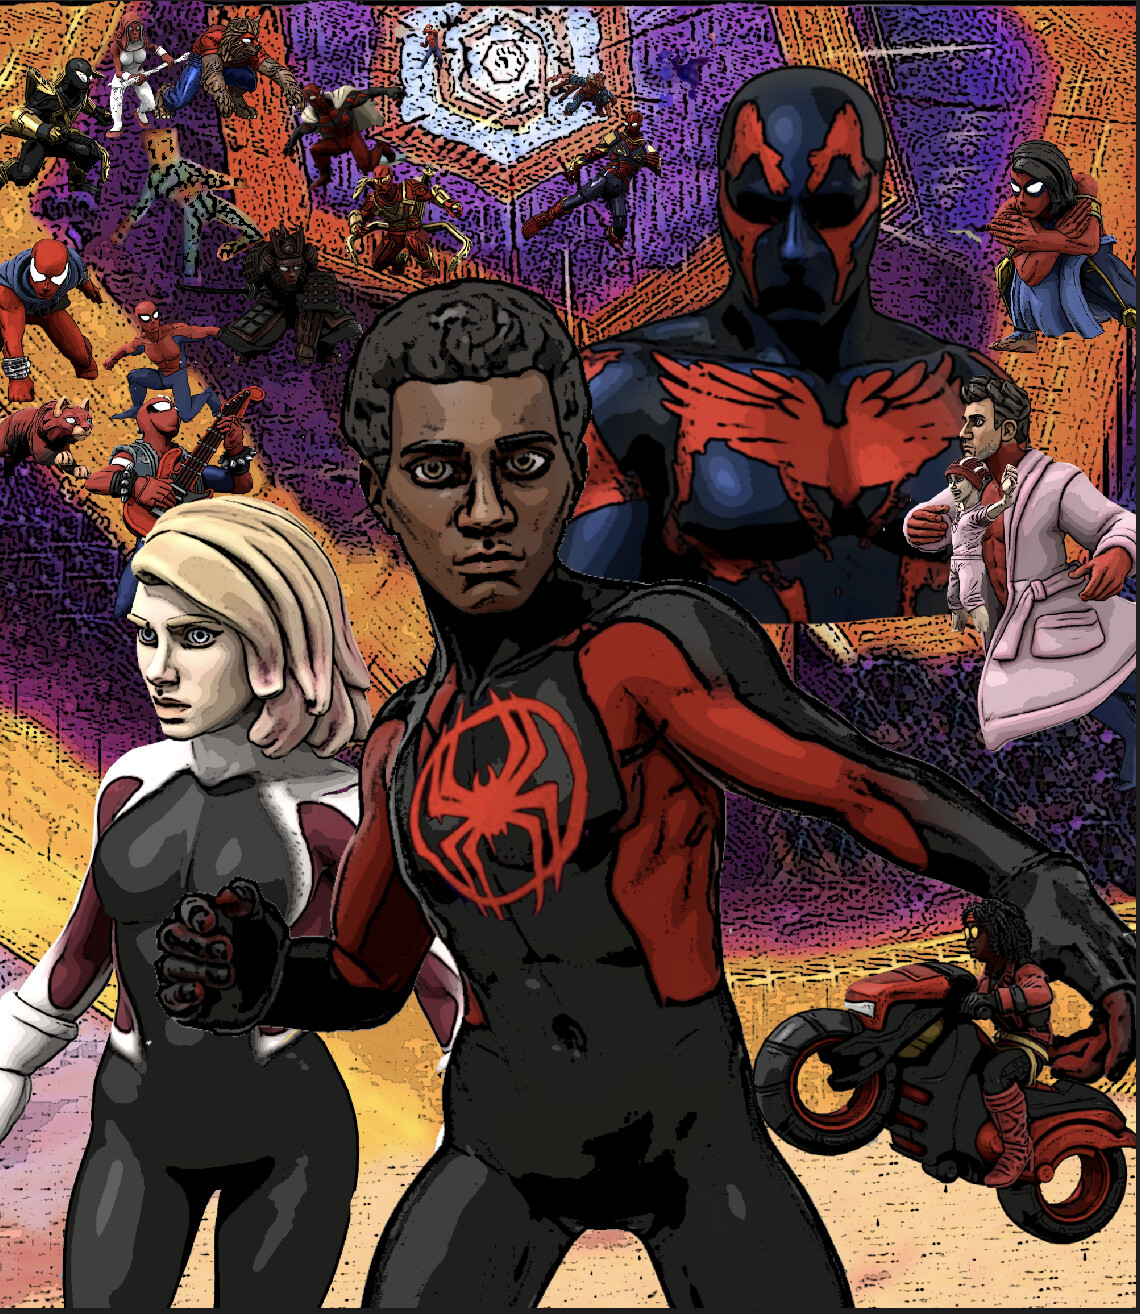 ArtStation - Spider-Man: Across The Spider-Verse Homage Poster